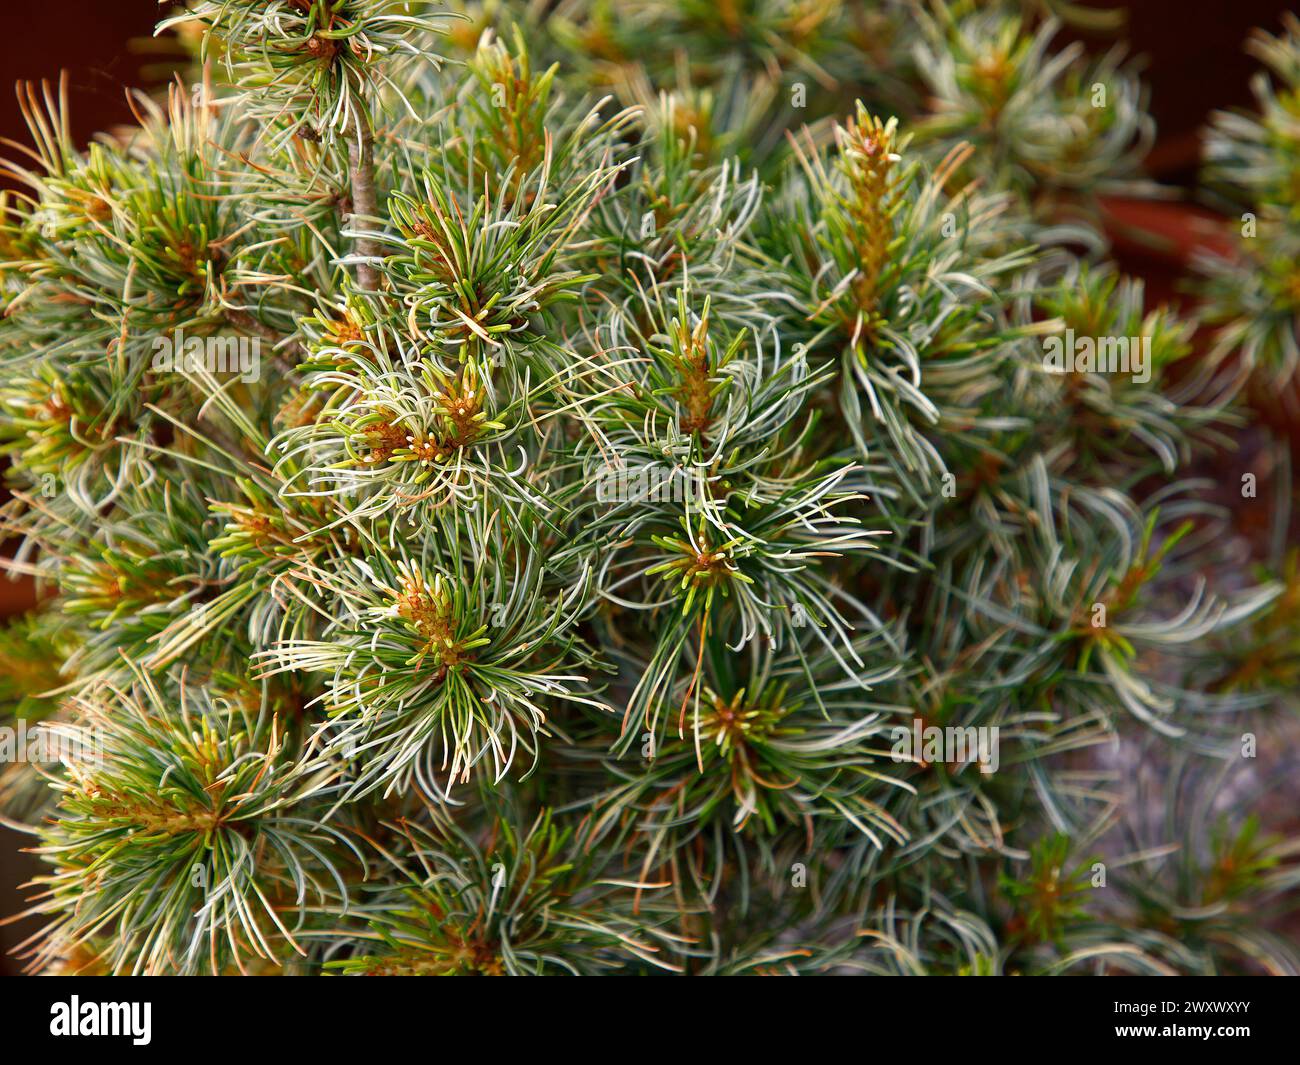 Closeup of the cream green needles of the dwarf garden conifer pinus parviflora tanima no yuki. Stock Photo